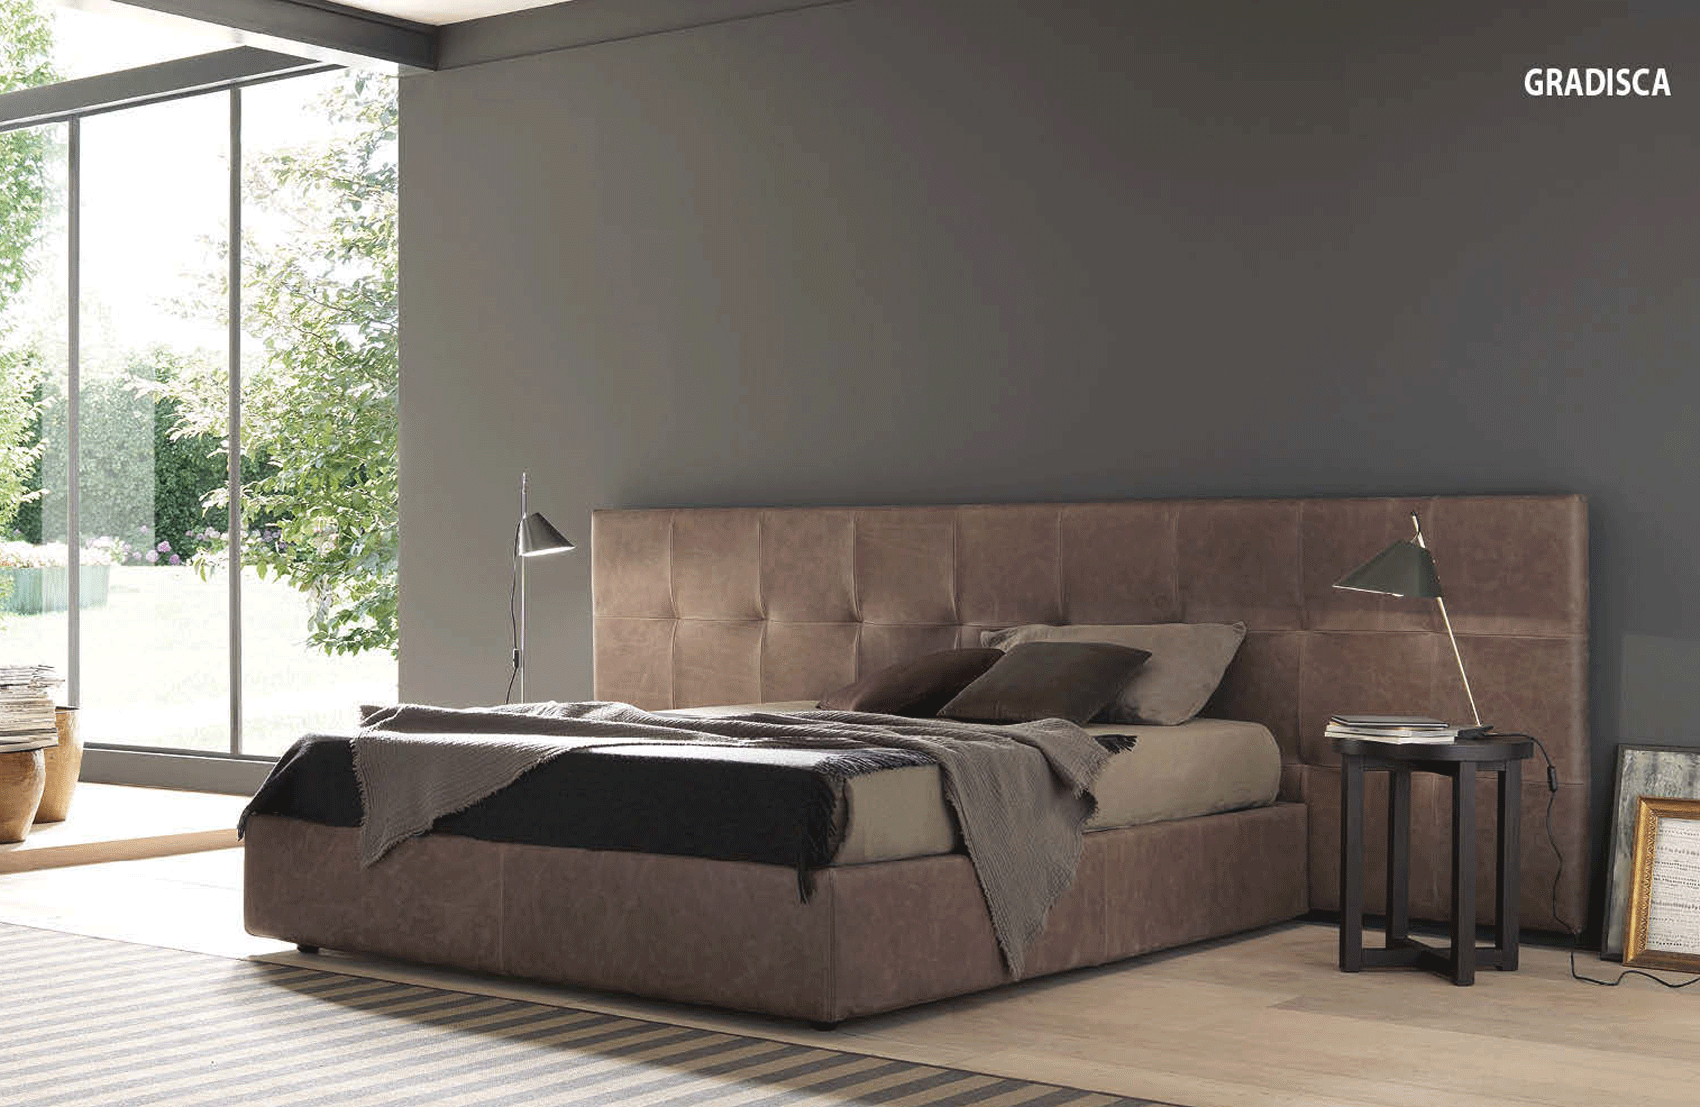 Bedroom Furniture Modern Bedrooms QS and KS Gradisca